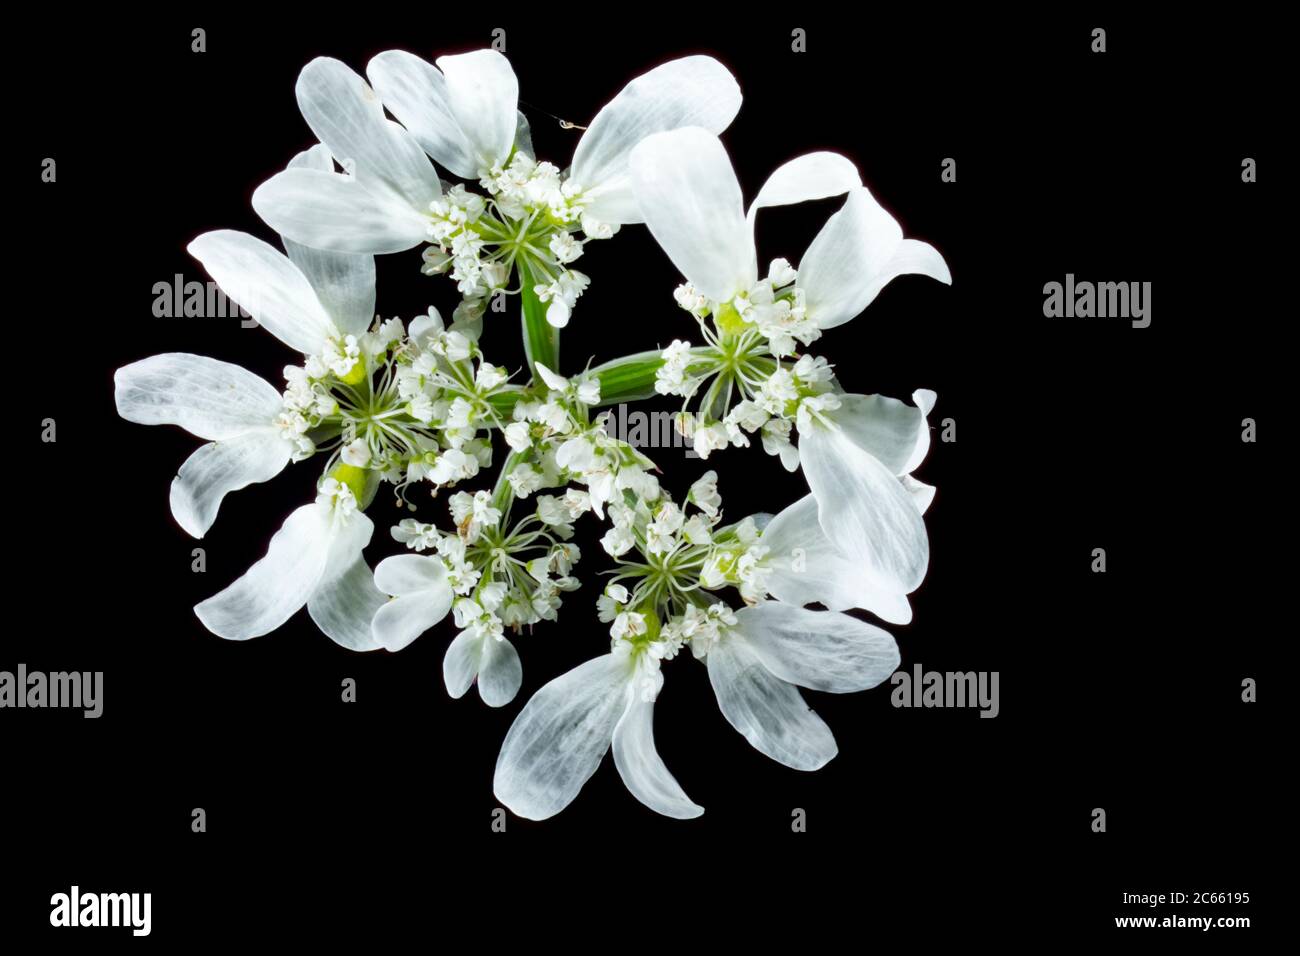 White lace flower, Orlaya grandiflora, Stock Photo